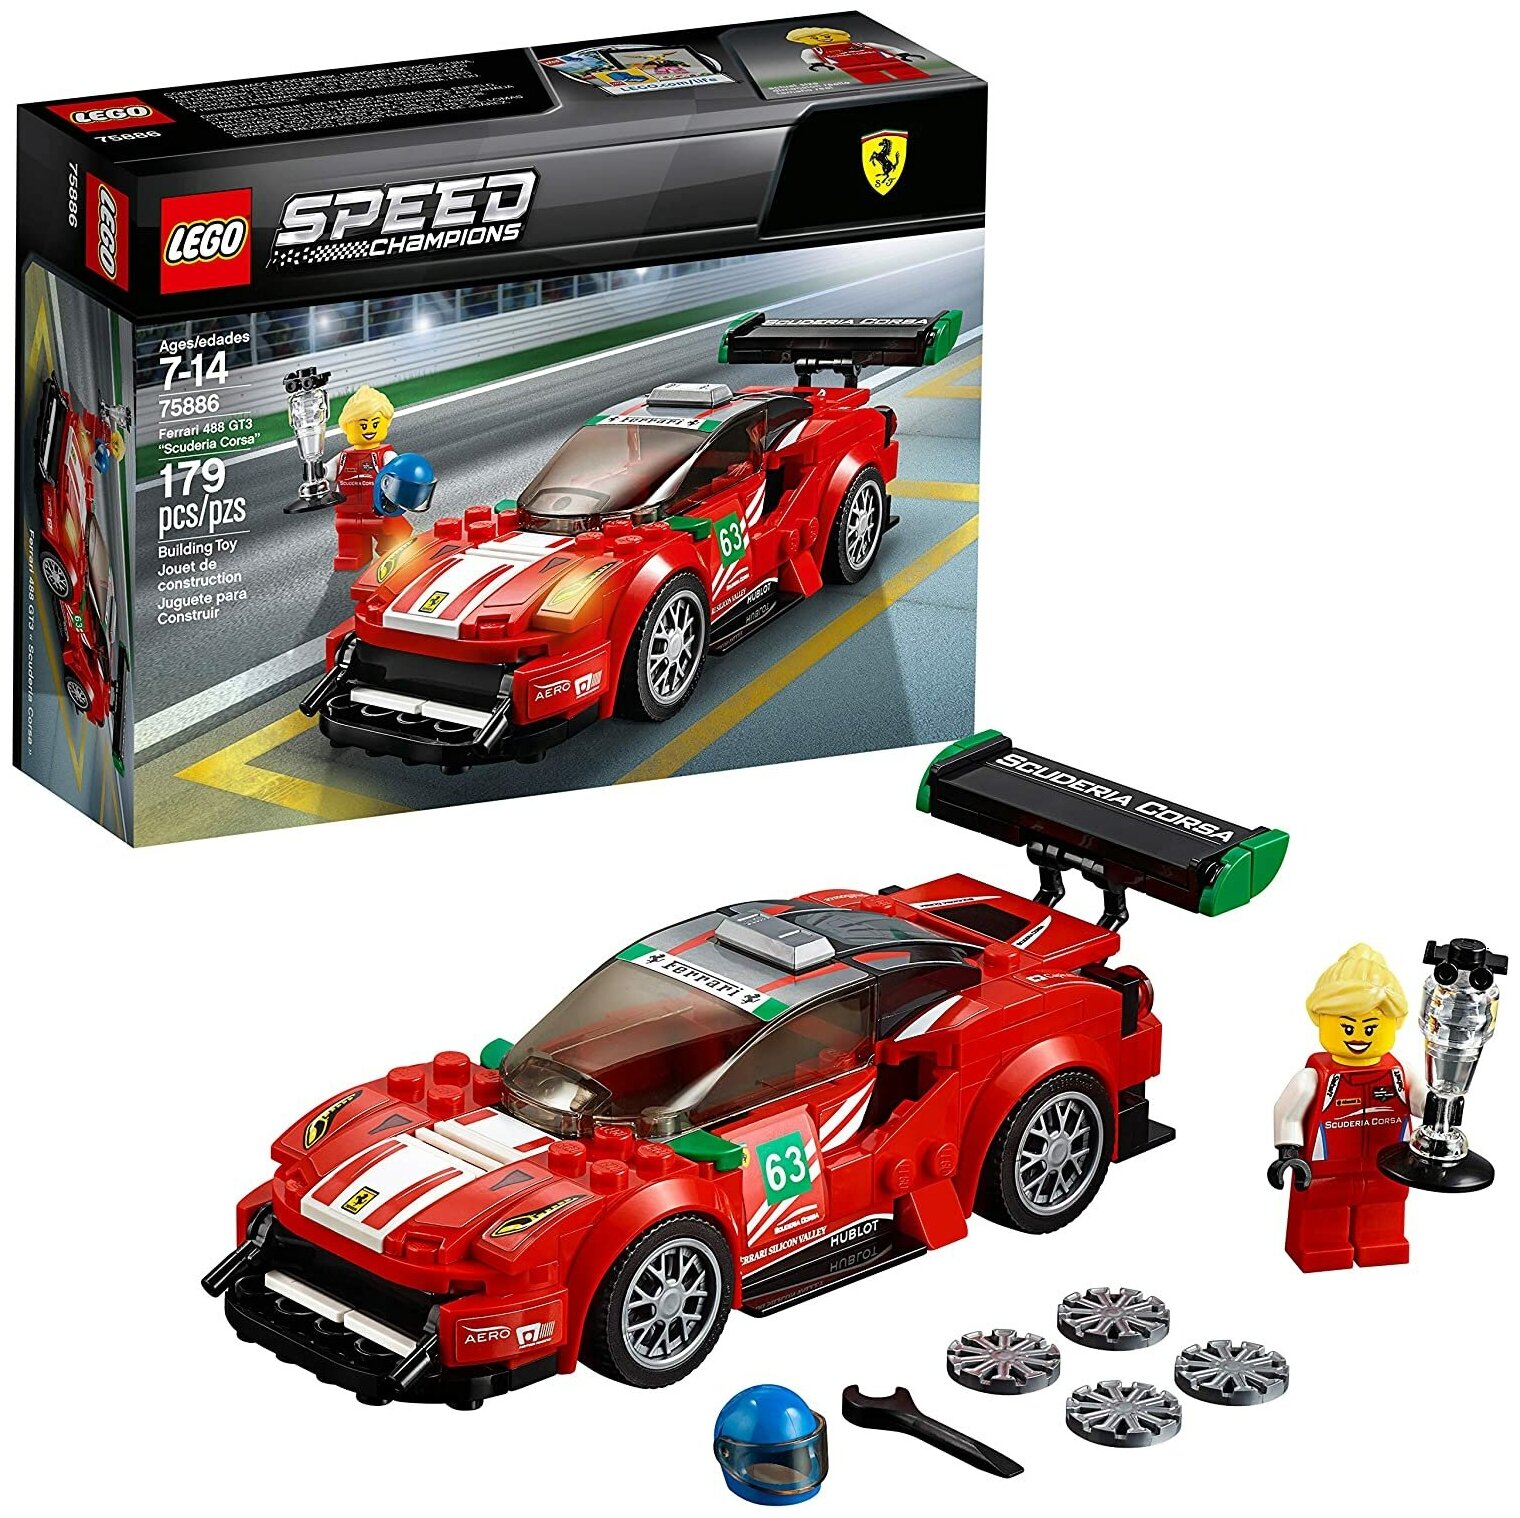 Конструктор LEGO Speed Champions Ferrari 488 GT3 Scuderia Corsa, 179 деталей (75886) - фото №9